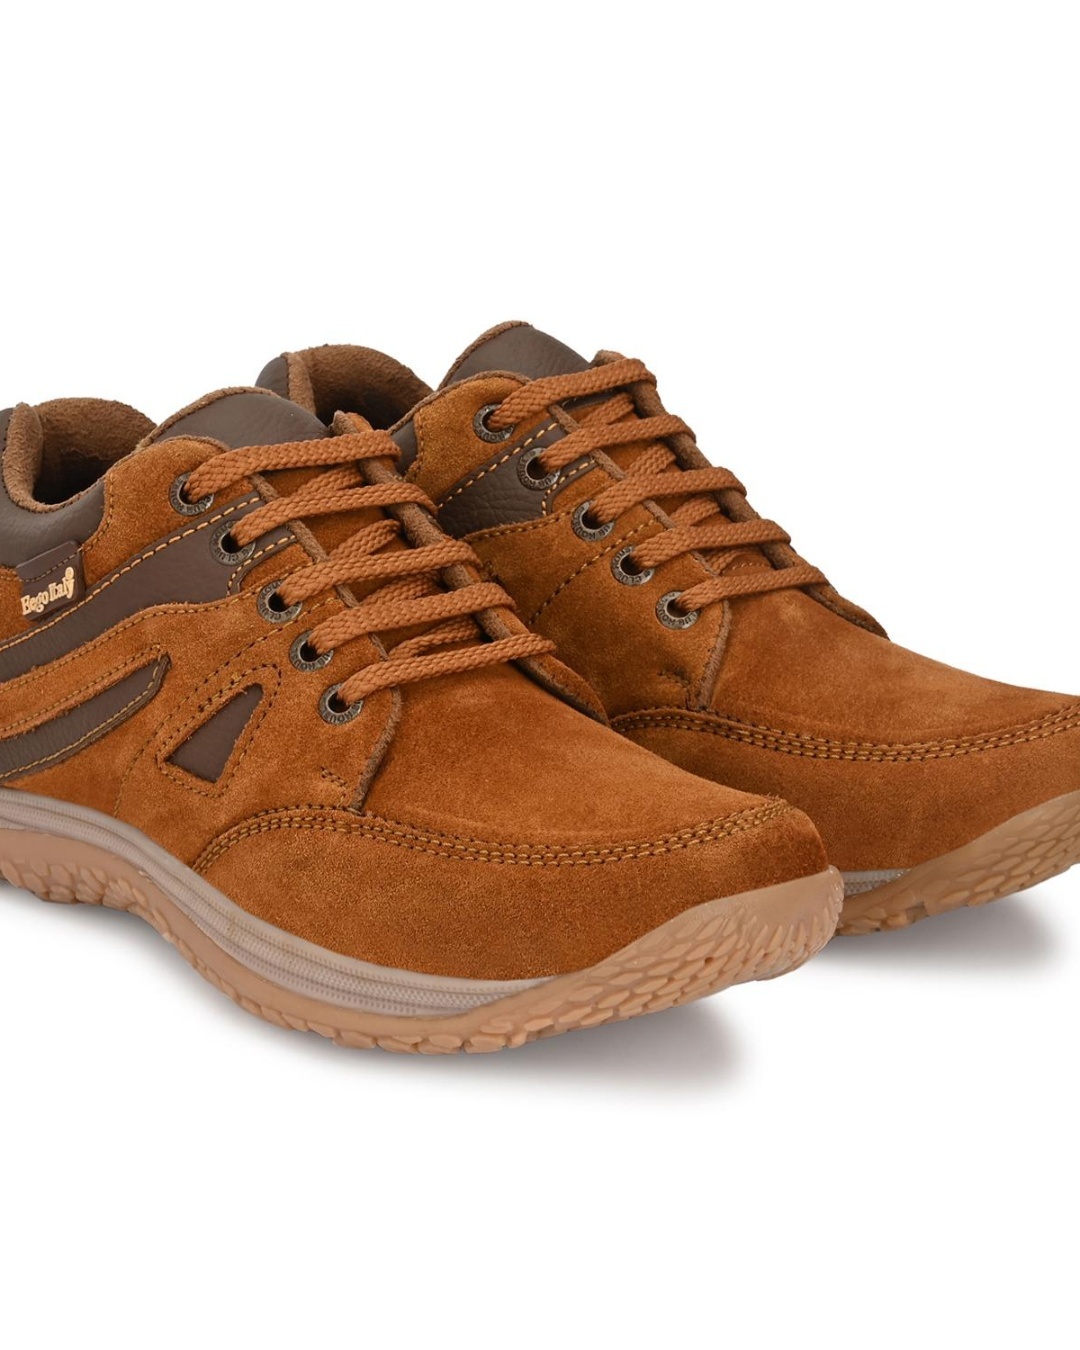 Buy Men's Brown Color Block Casual Shoes Online in India at Bewakoof